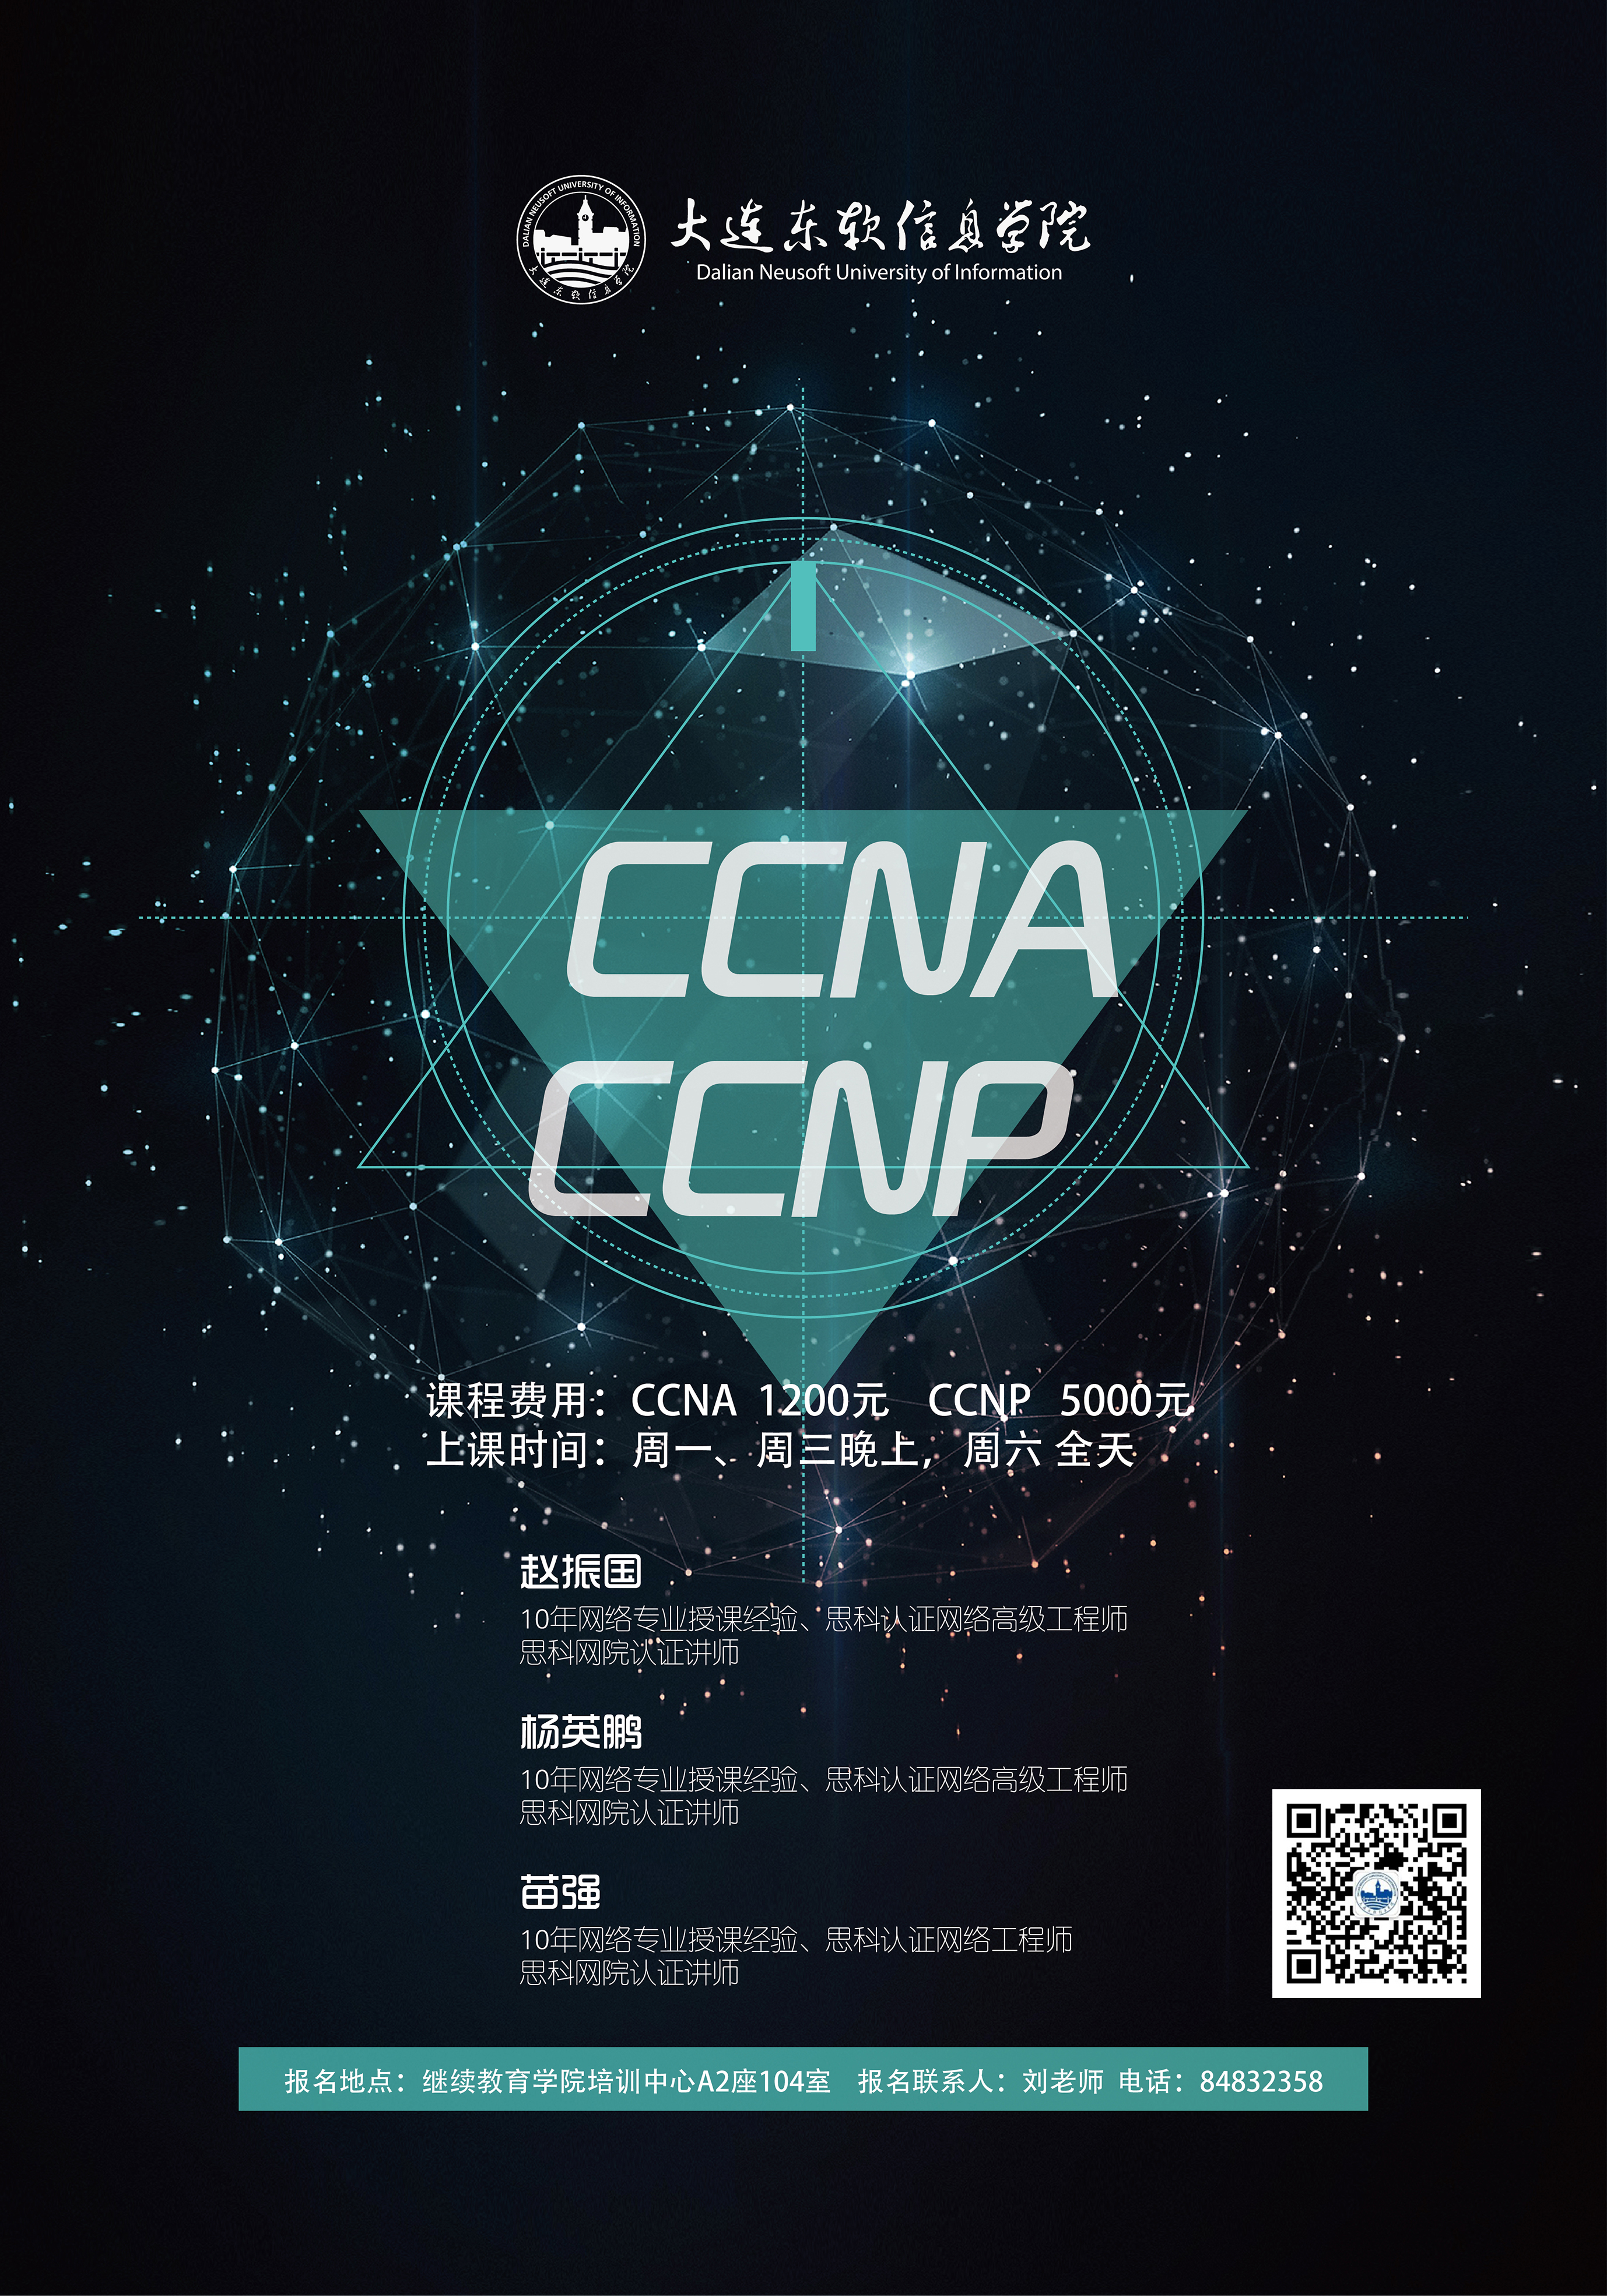 CCNA/CCNP认证校内培训正式启动，名额有限！